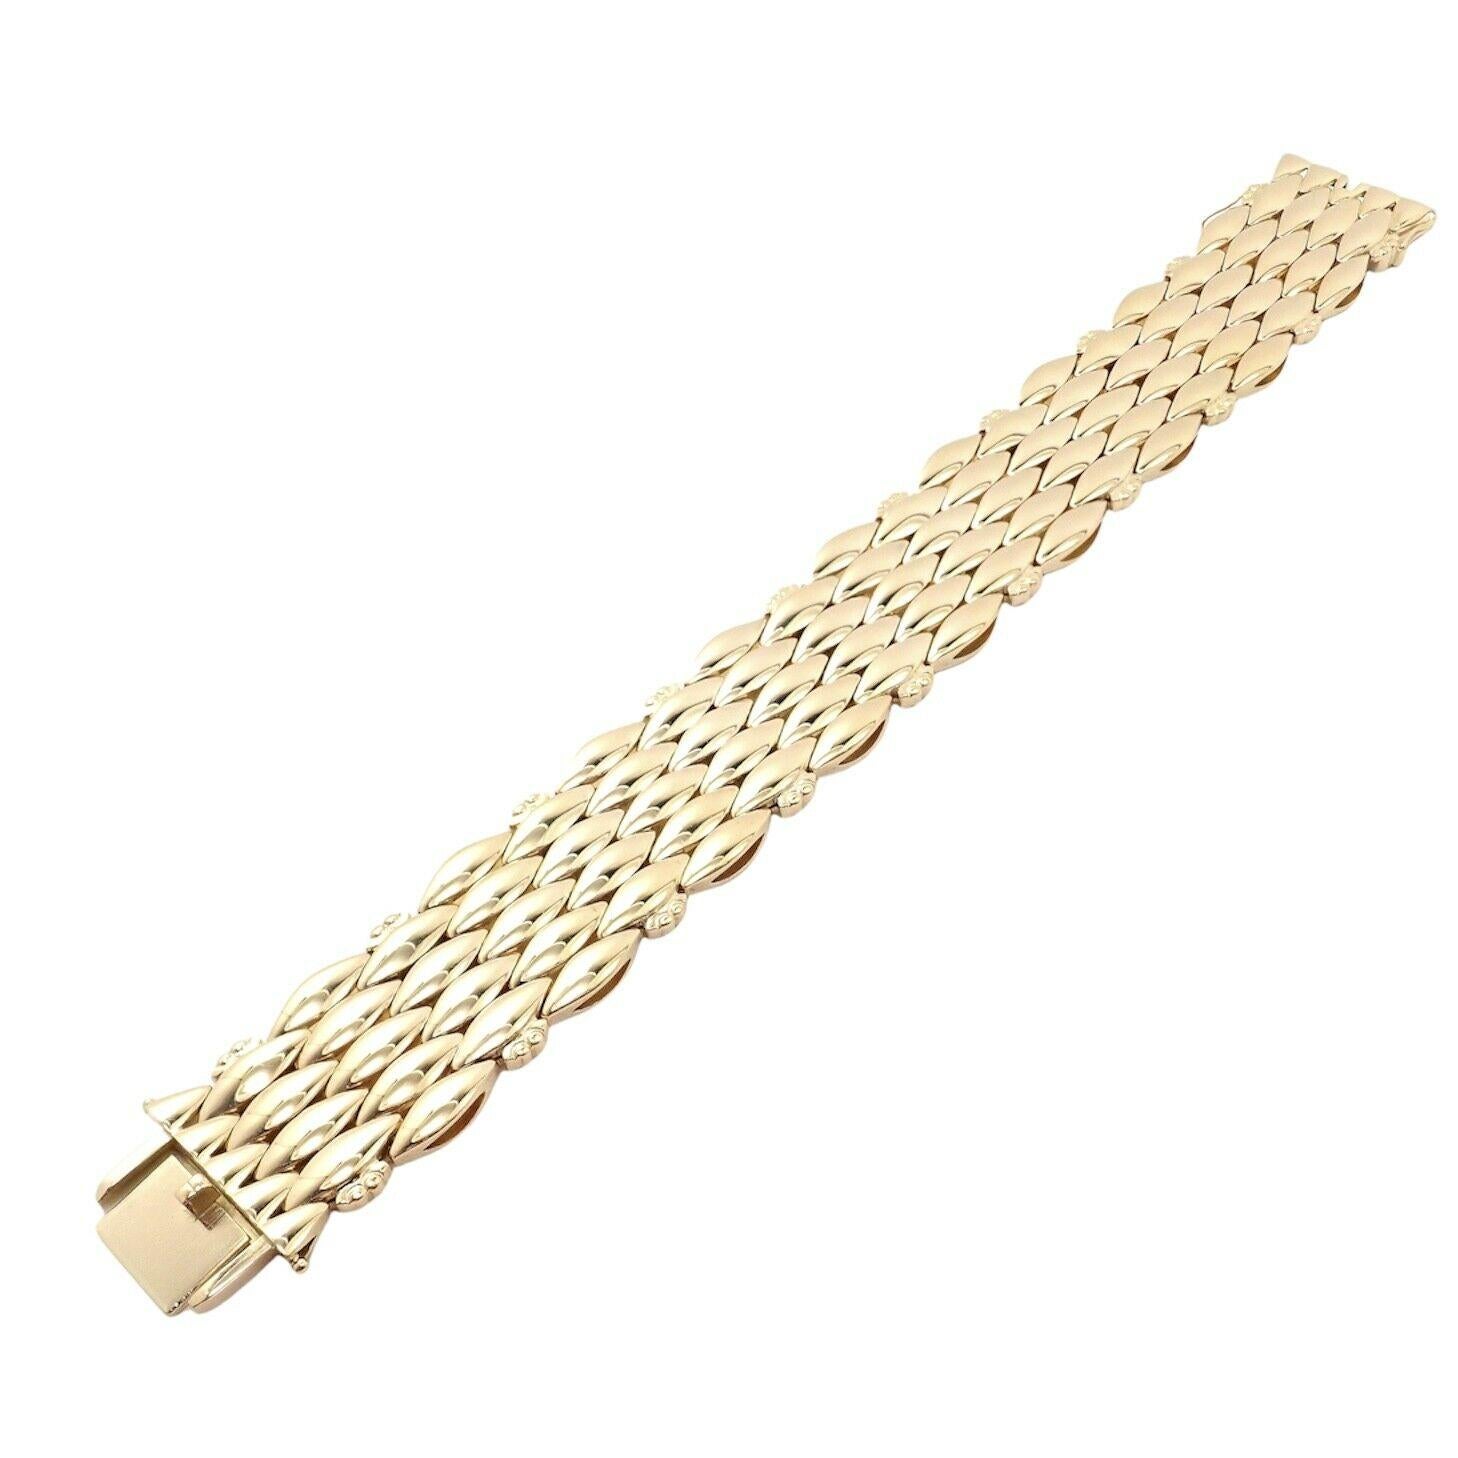 18k Yellow Gold Wide Link Bracelet by Harald Nielsen for Georg Jensen.
Details:
Length: Total Length: 7.9